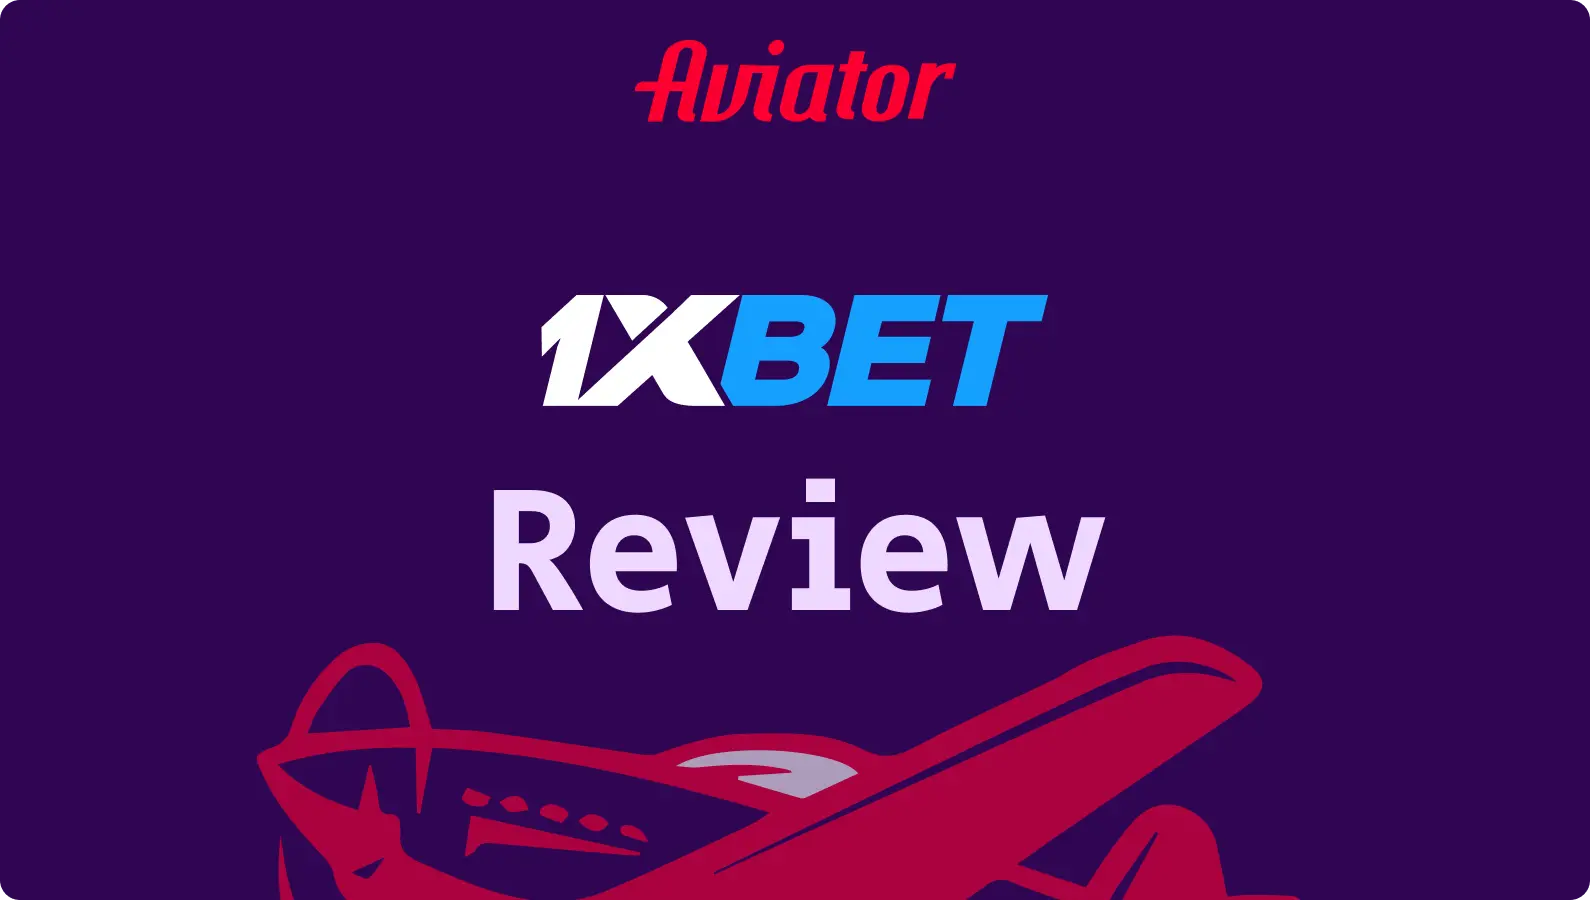 1xBet Aviator Review